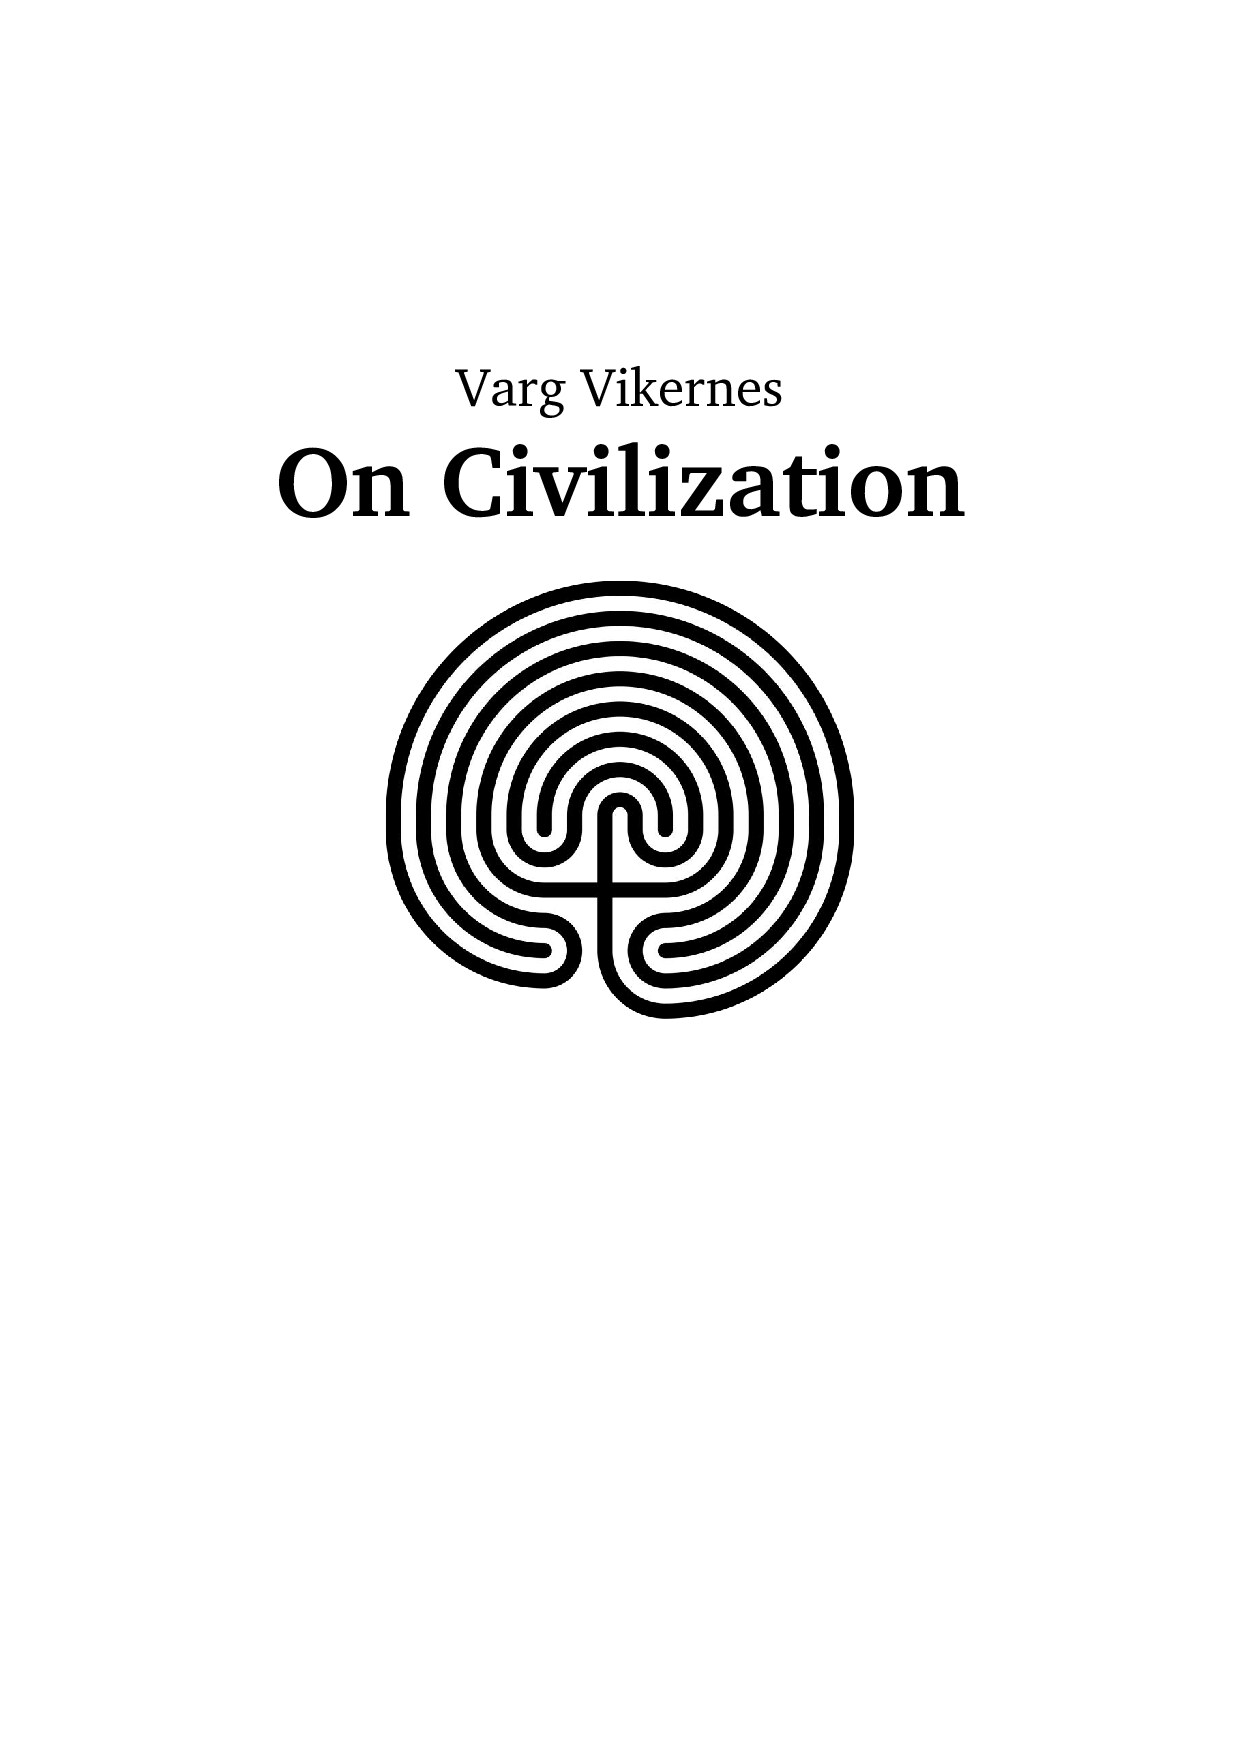 On Civilization